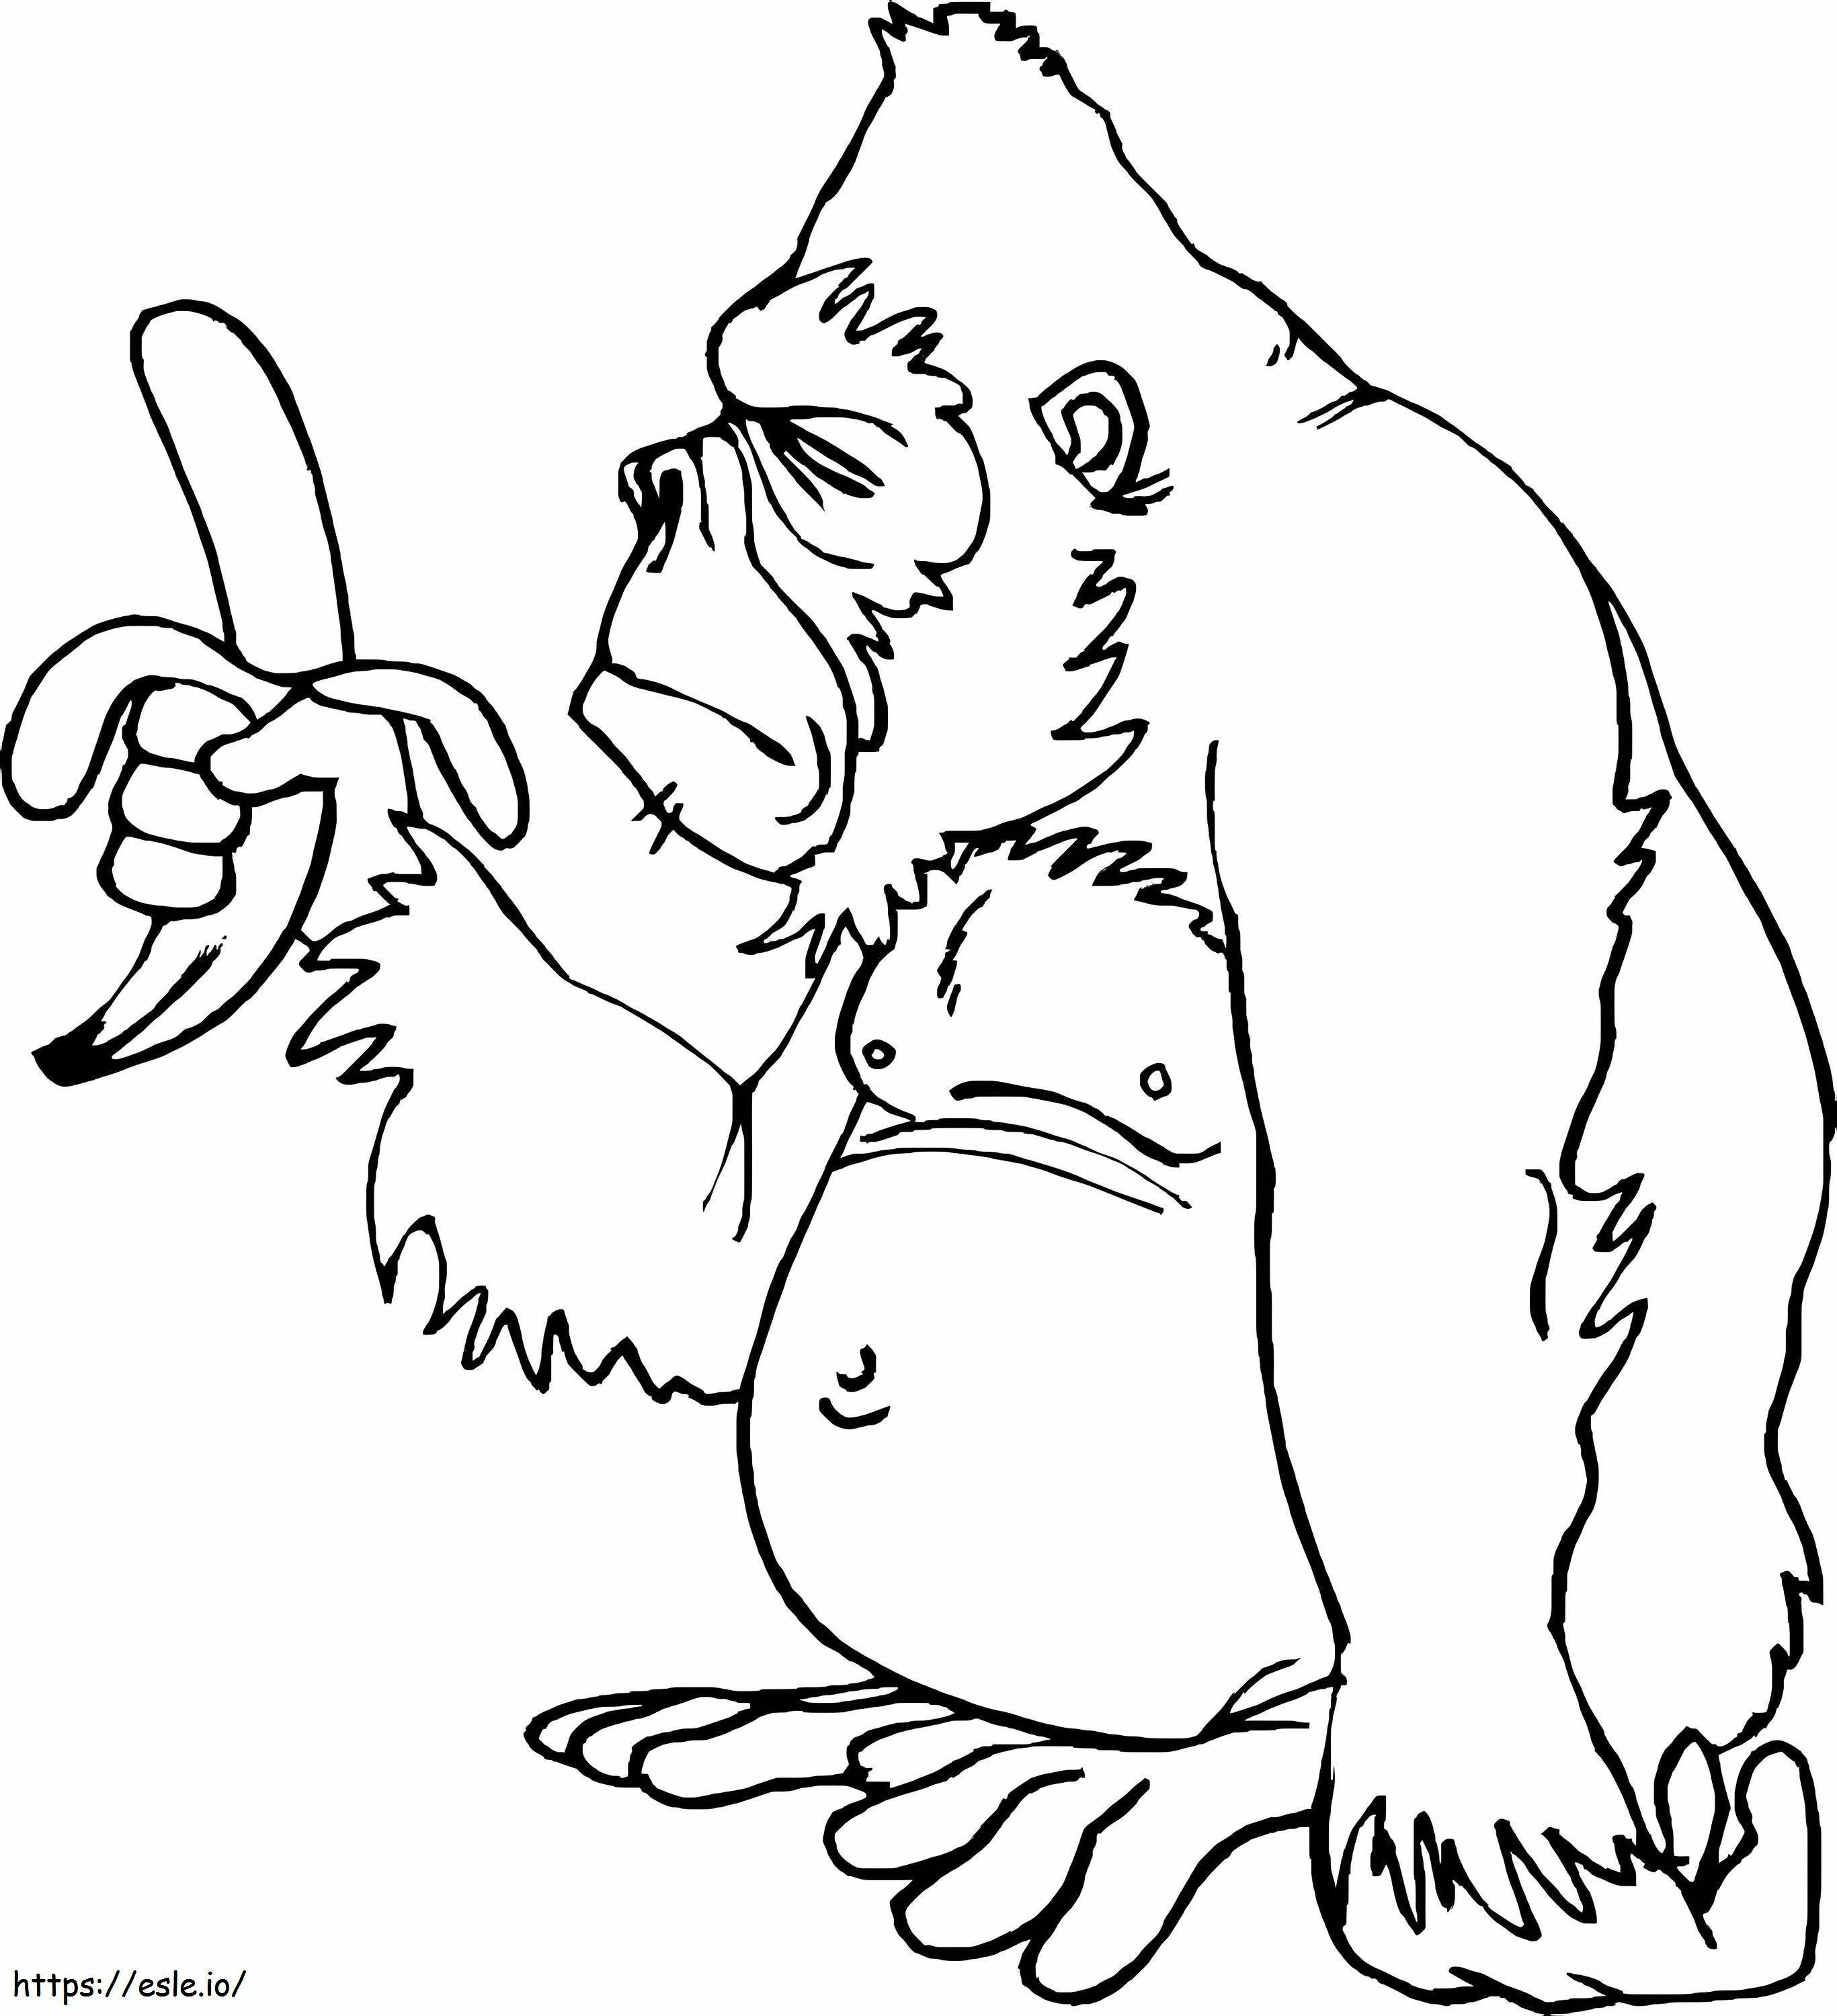 Gruba Małpa Trzyma Banana kolorowanka